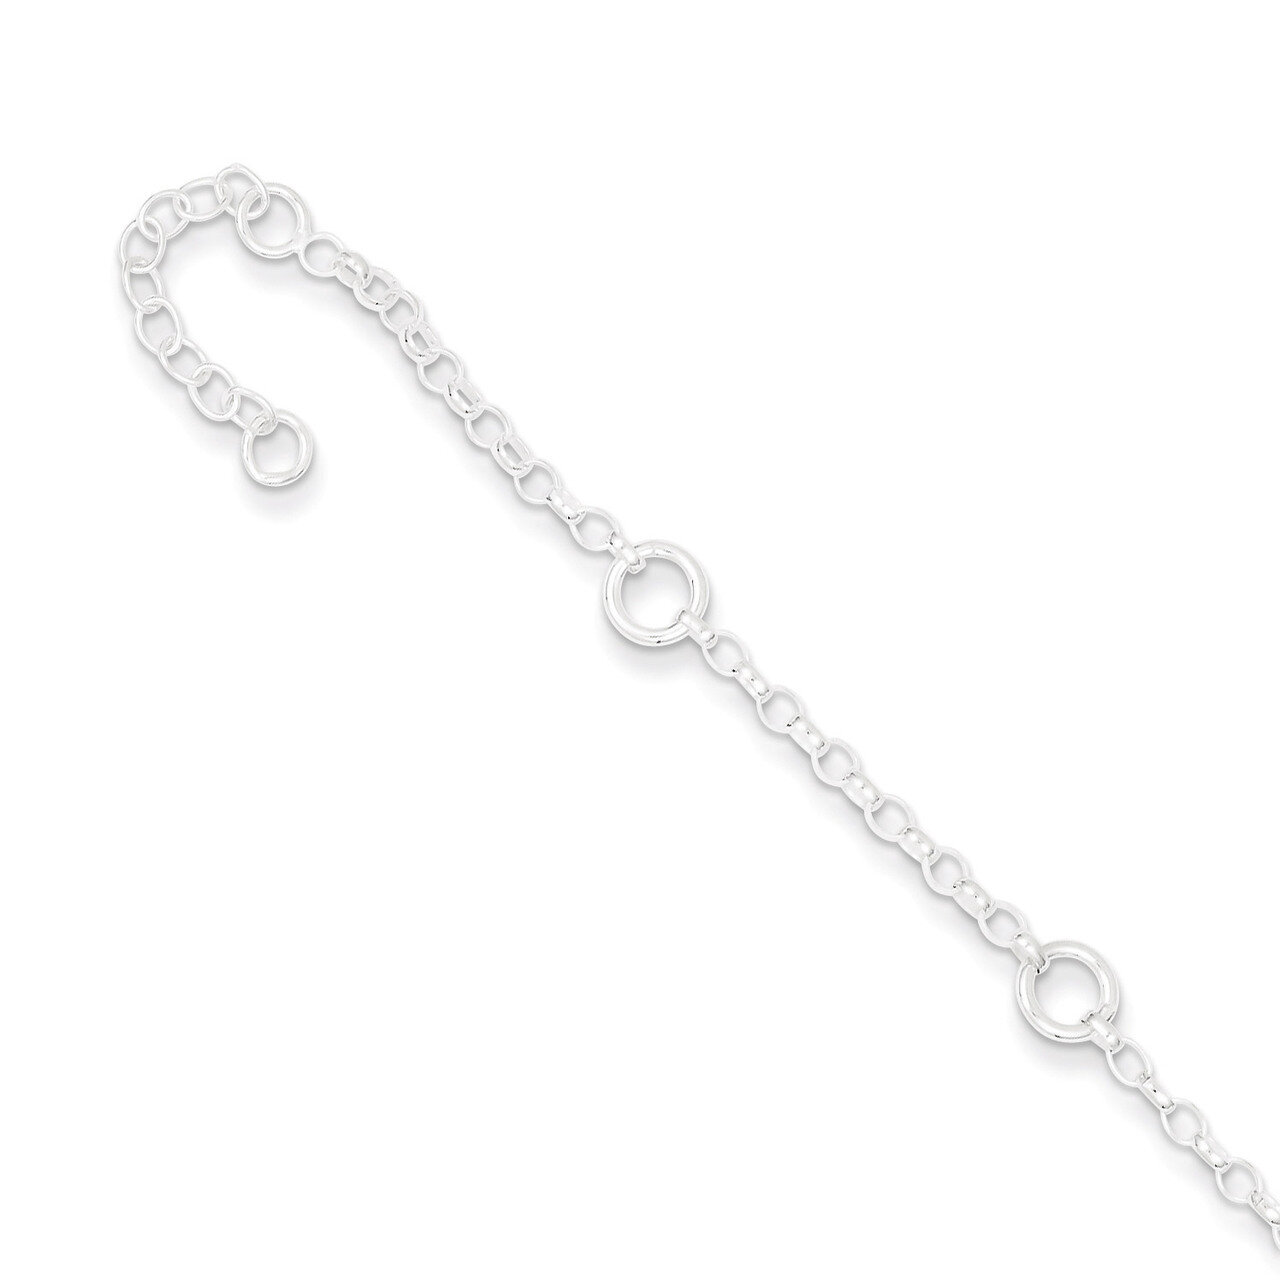 Fancy Child's Bracelet Sterling Silver QG1329-6